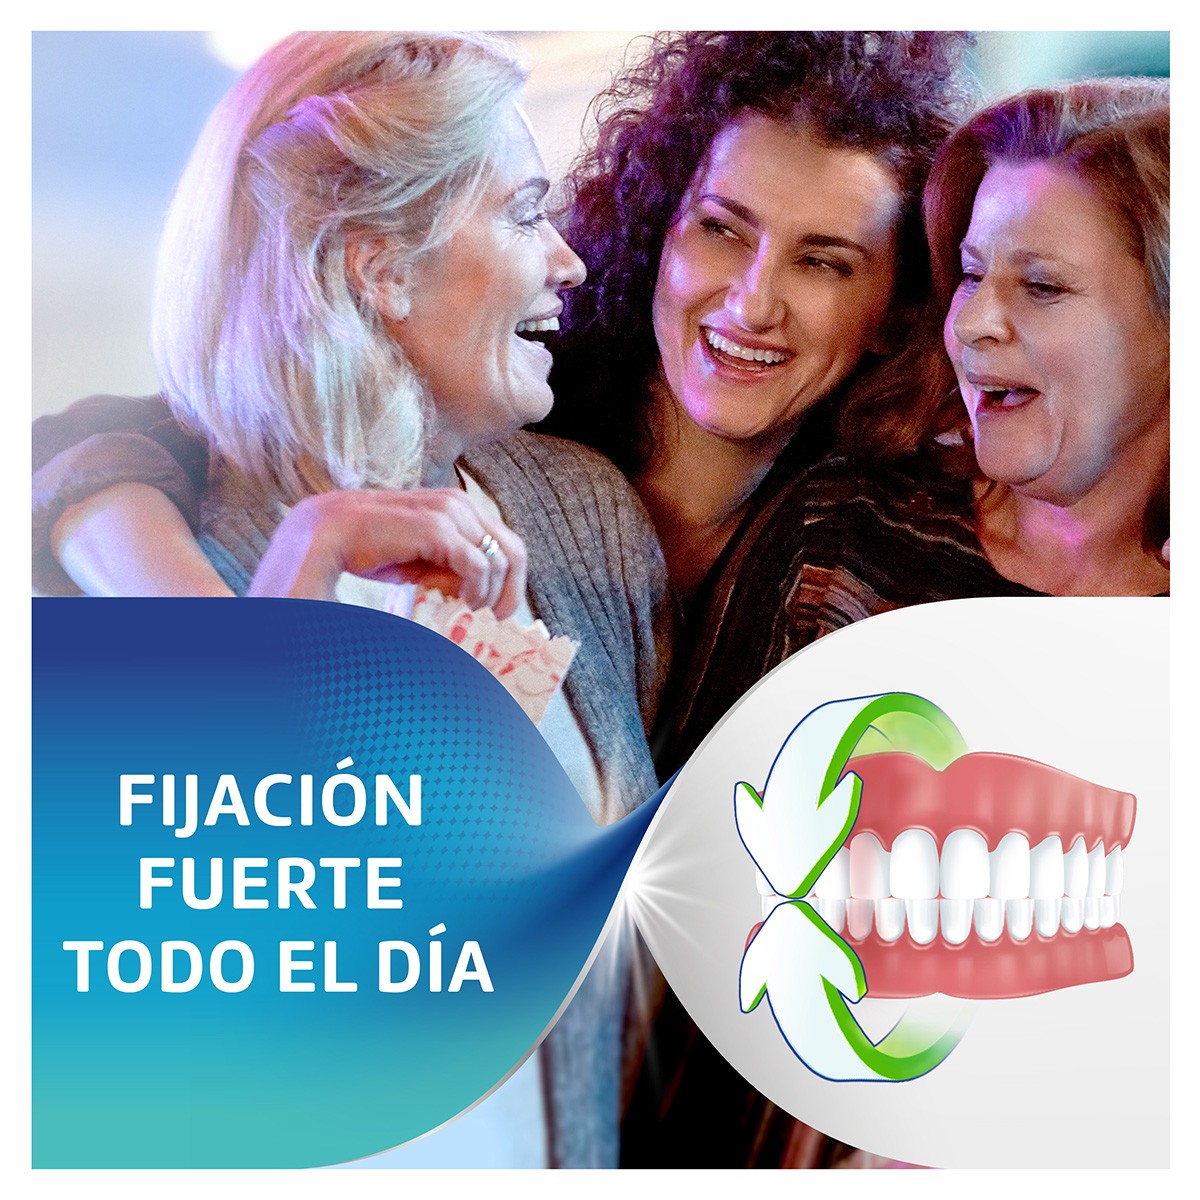 Imagen de Corega Extra Fuerte crema fijadora para prótesis dentales 70g